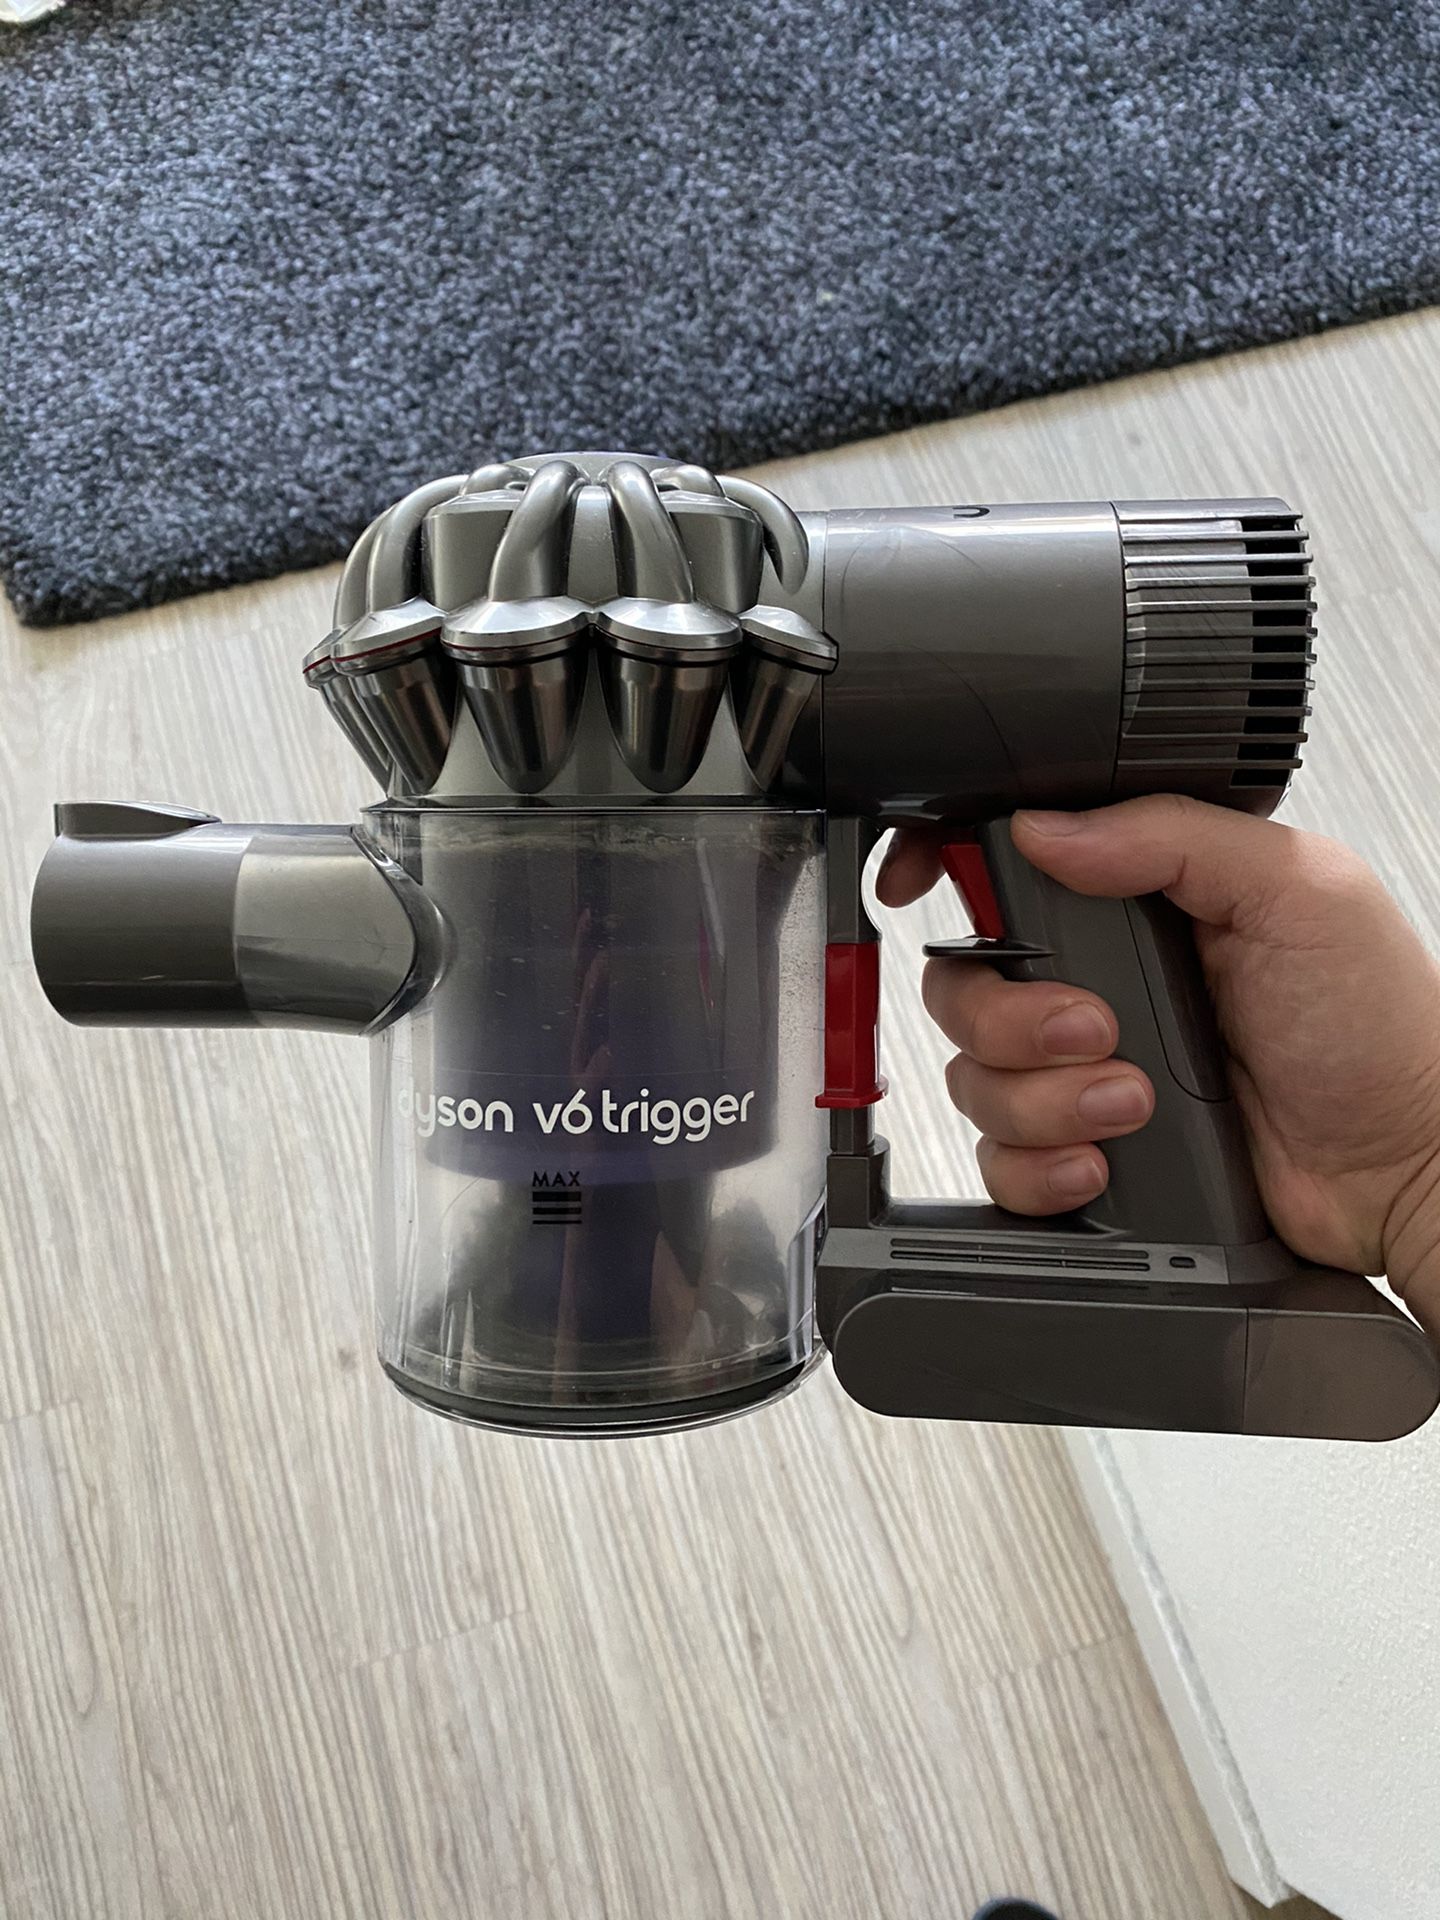 Dyson V6 vacuum